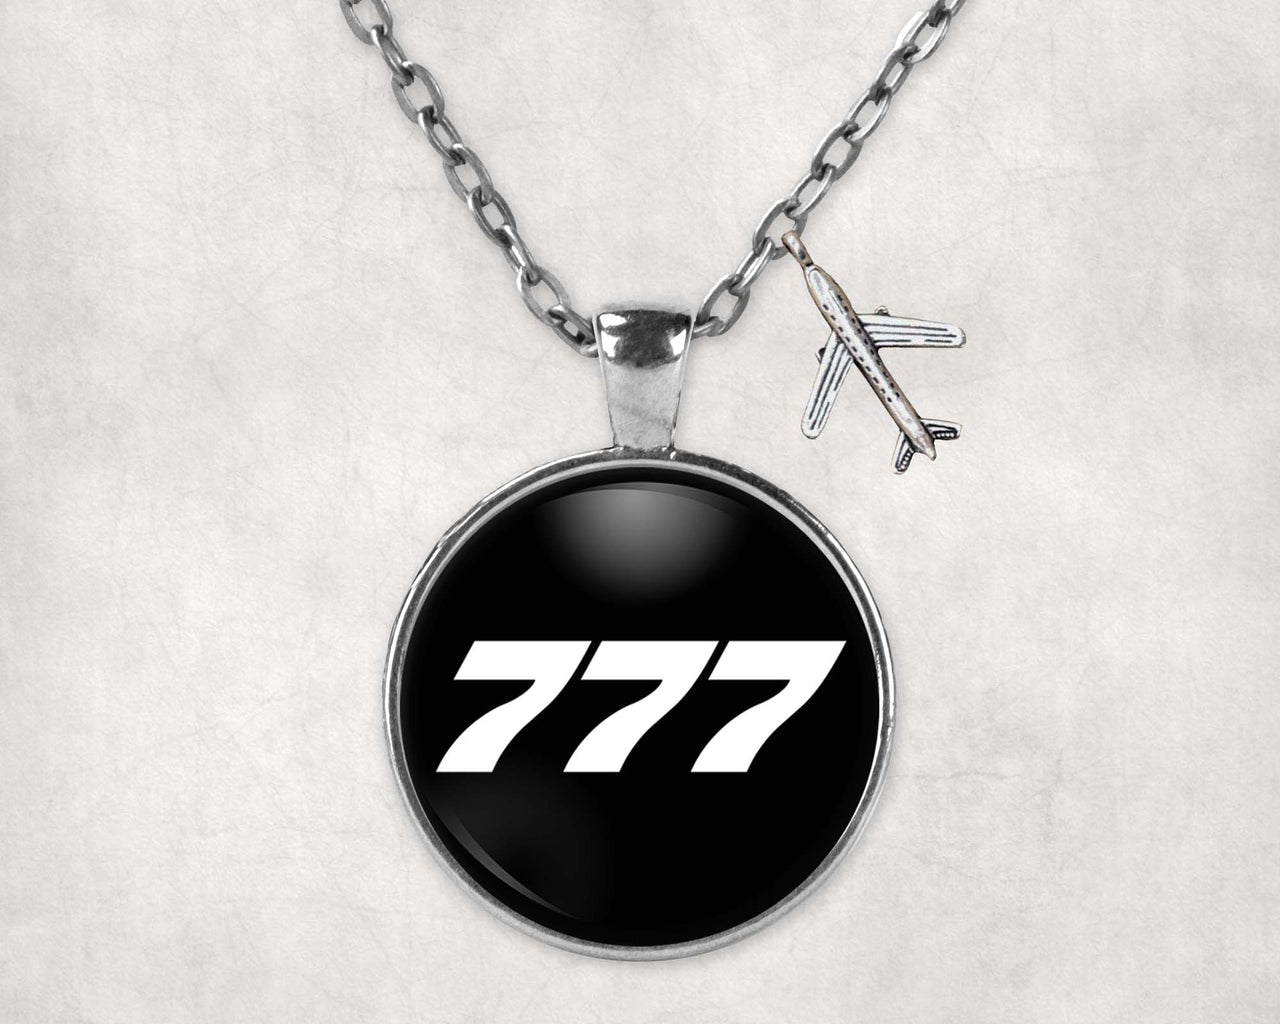 777 Flat Text Designed Necklaces